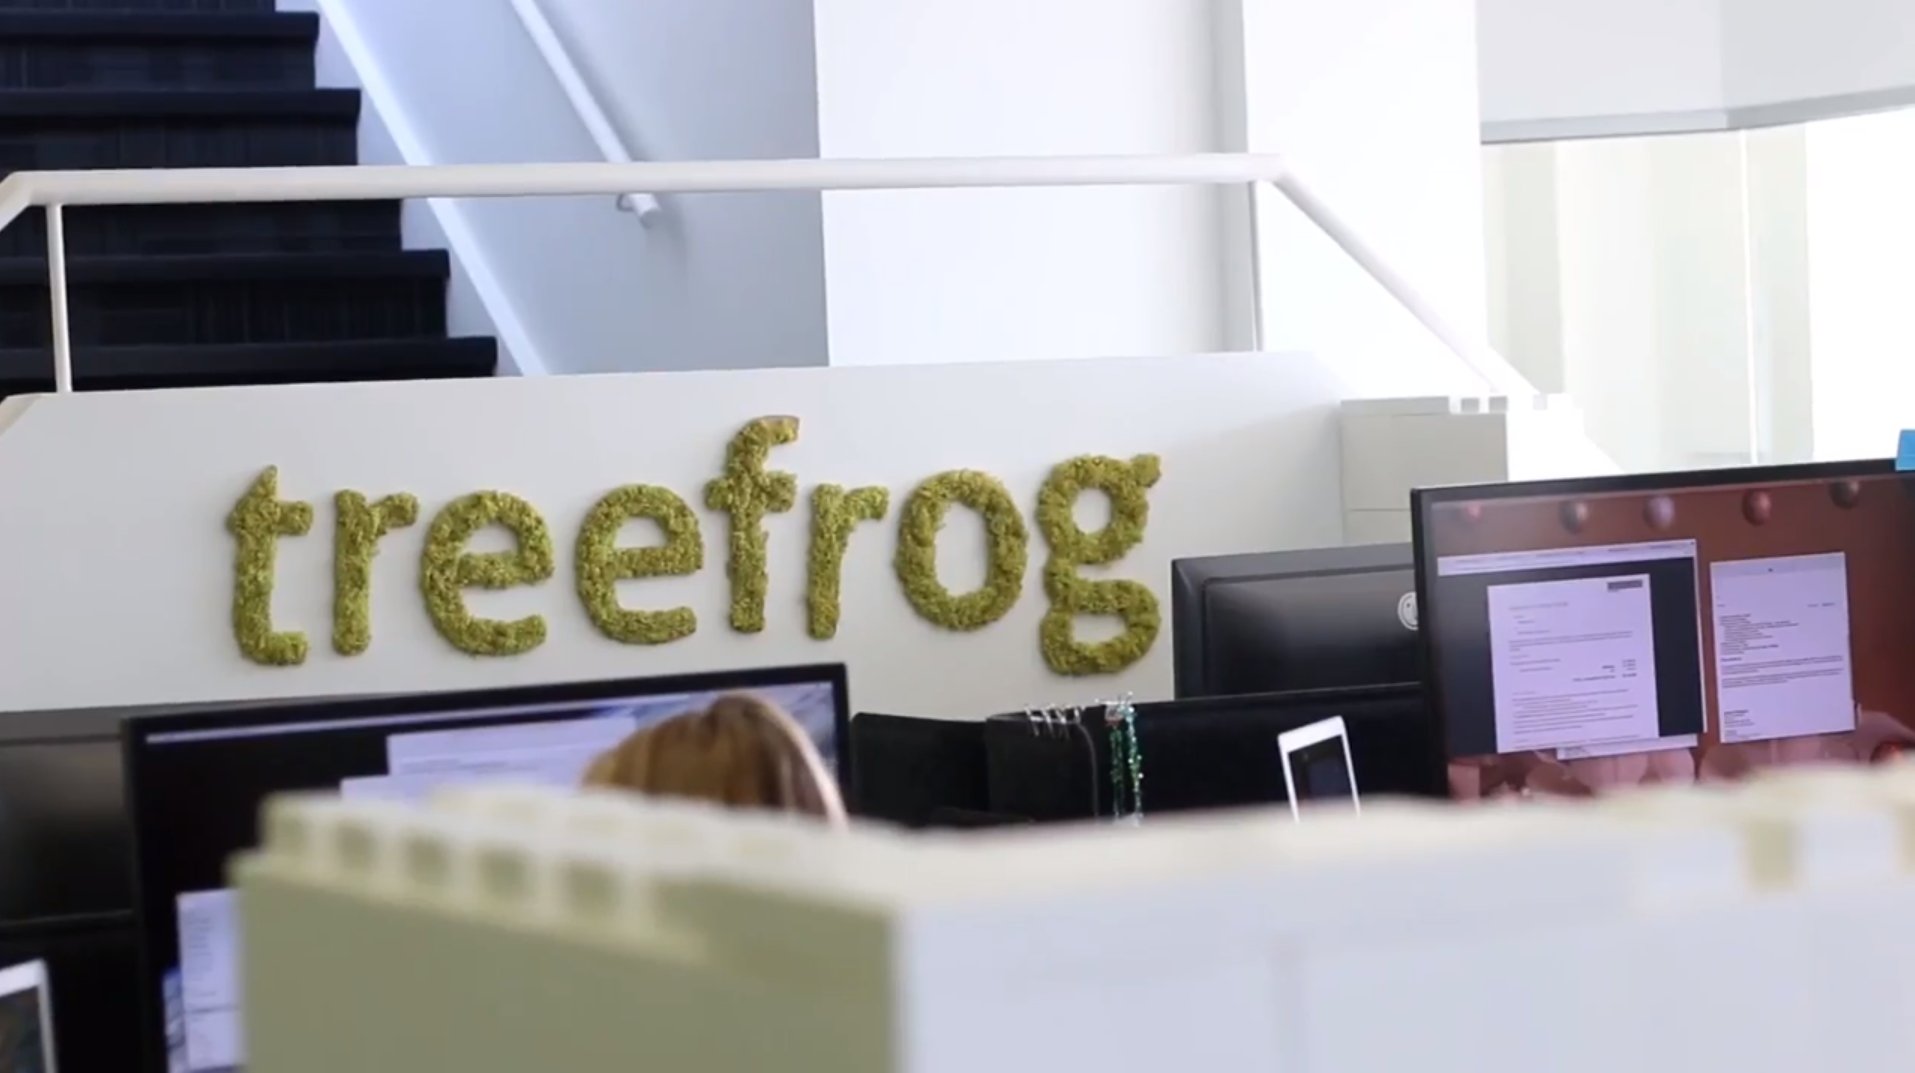 Treefrog Office